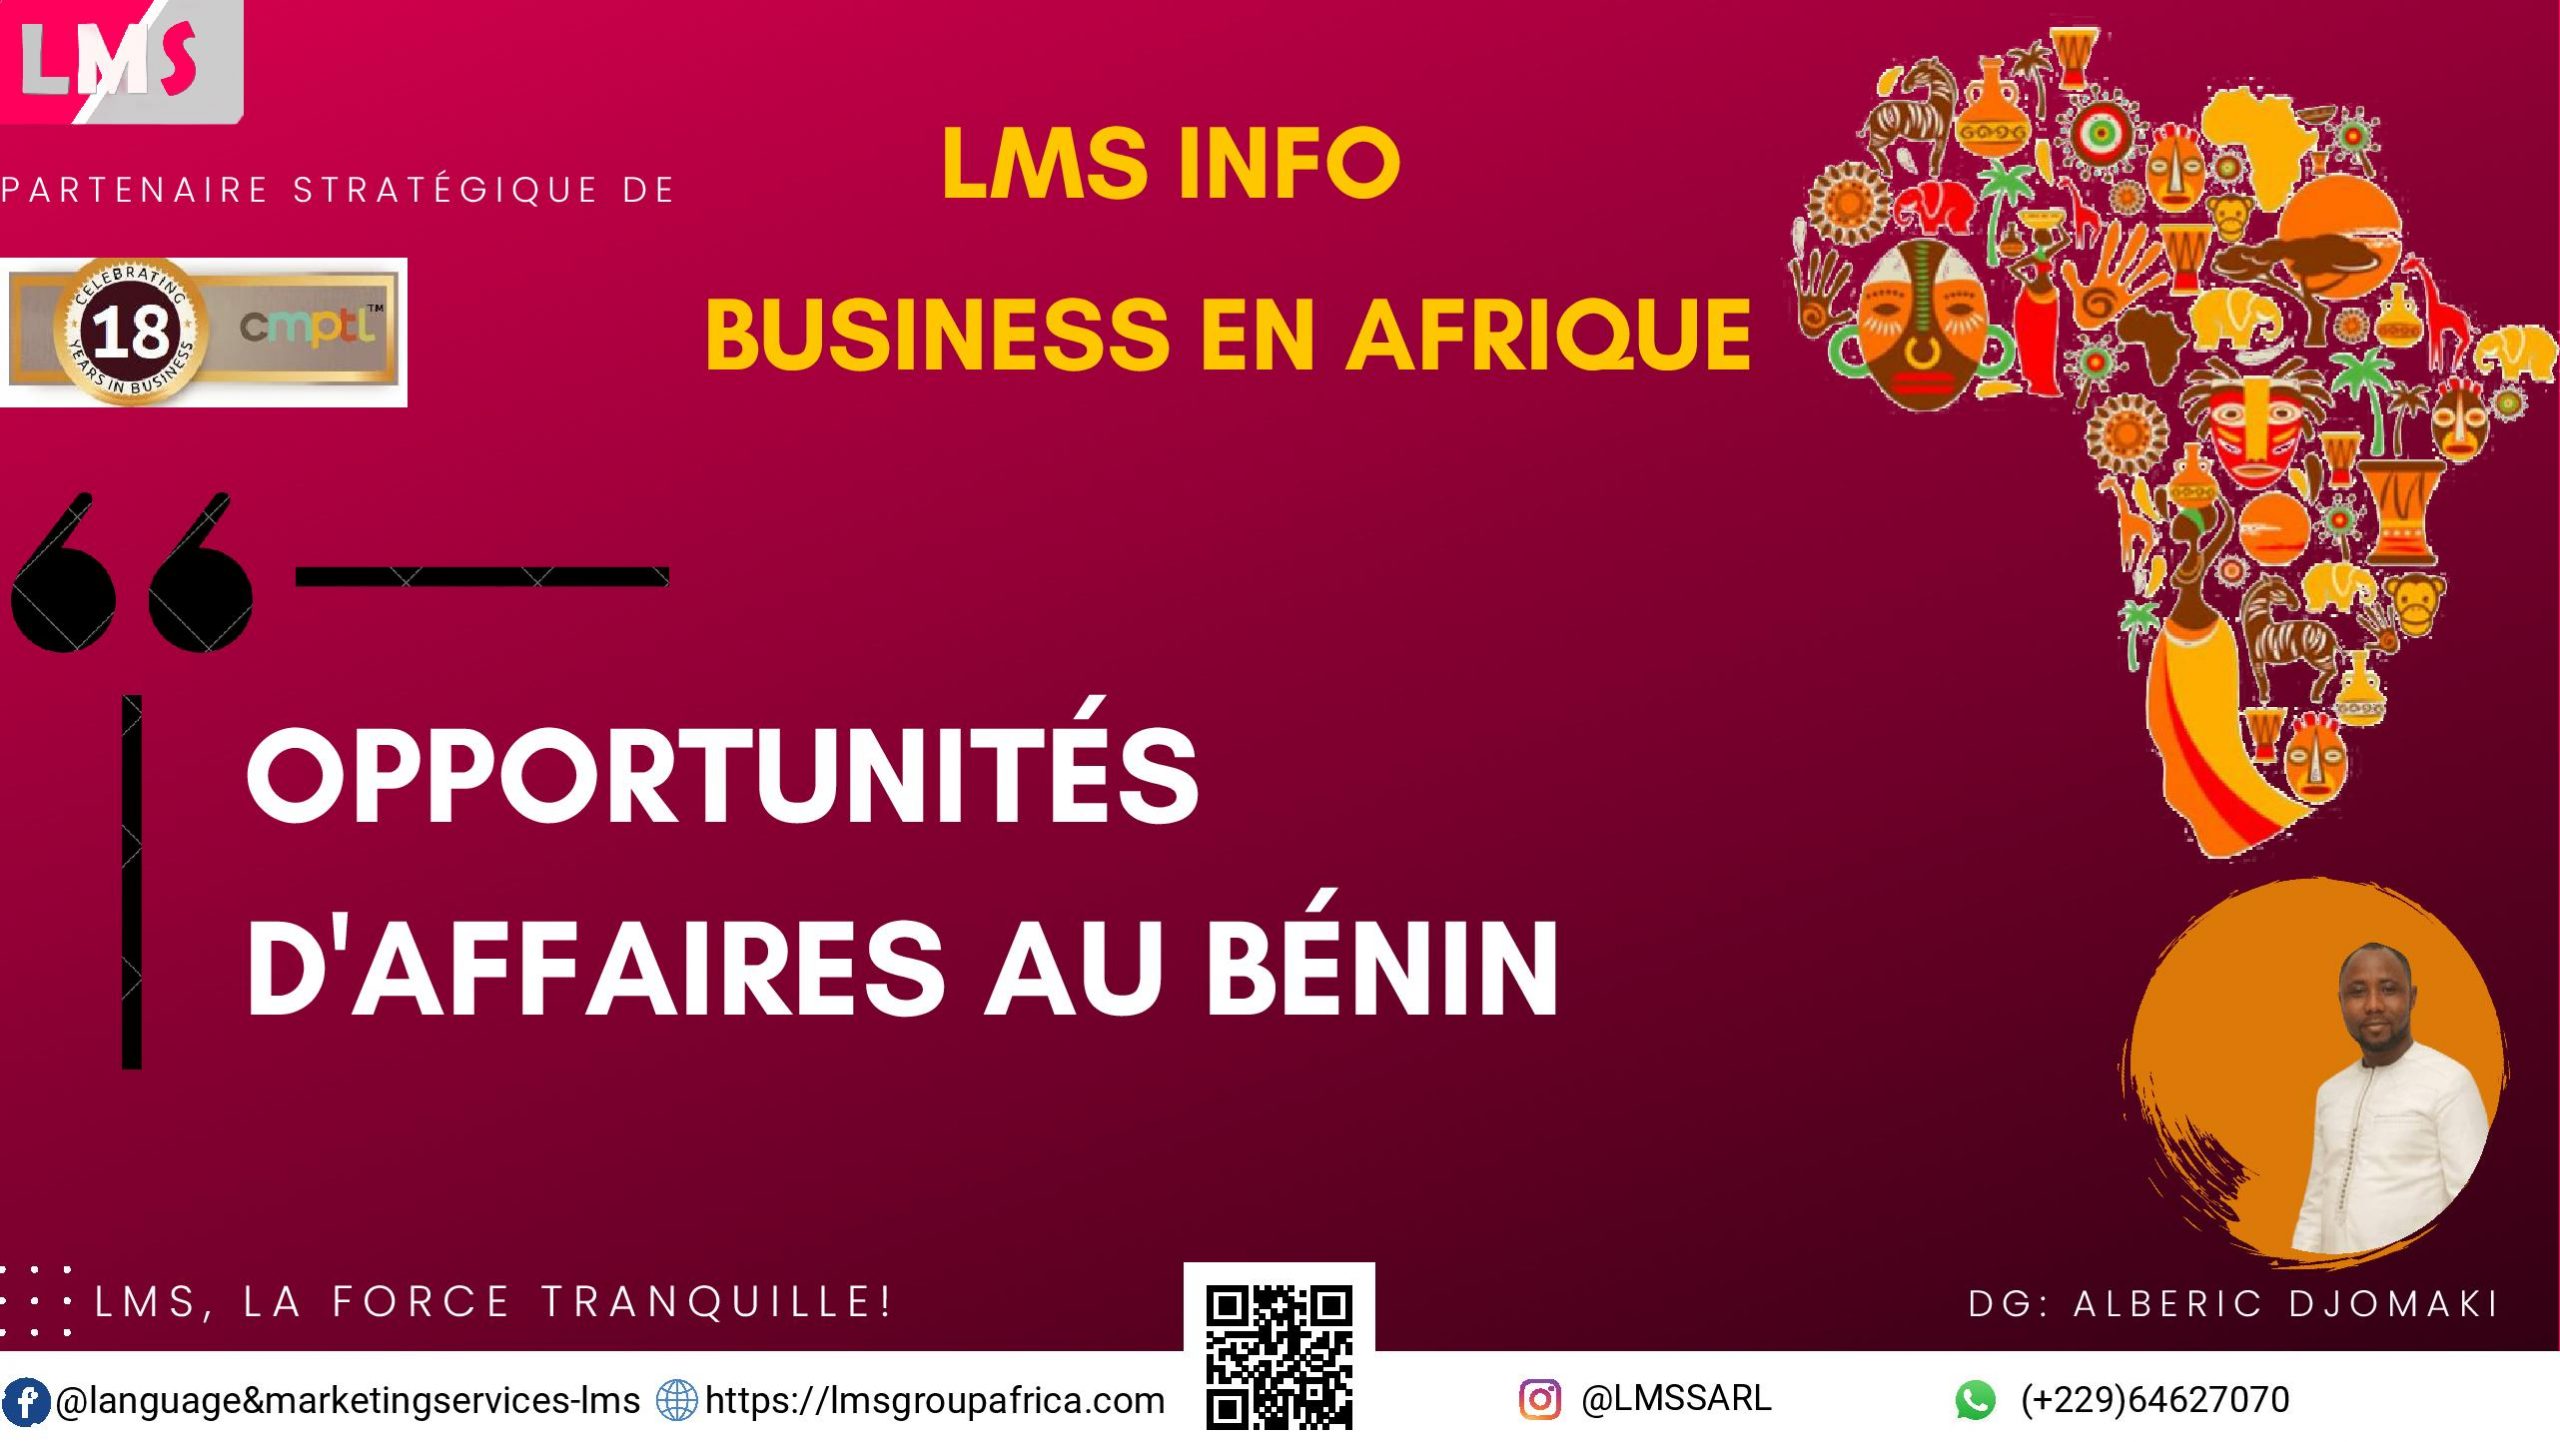 BUSINESS OPPORTUNITIES IN BENIN

OPPORTUNITÉS D'AFFAIRES AU BÉNINOPPORTUNITÉS D'AFFAIRES AU BÉNIN